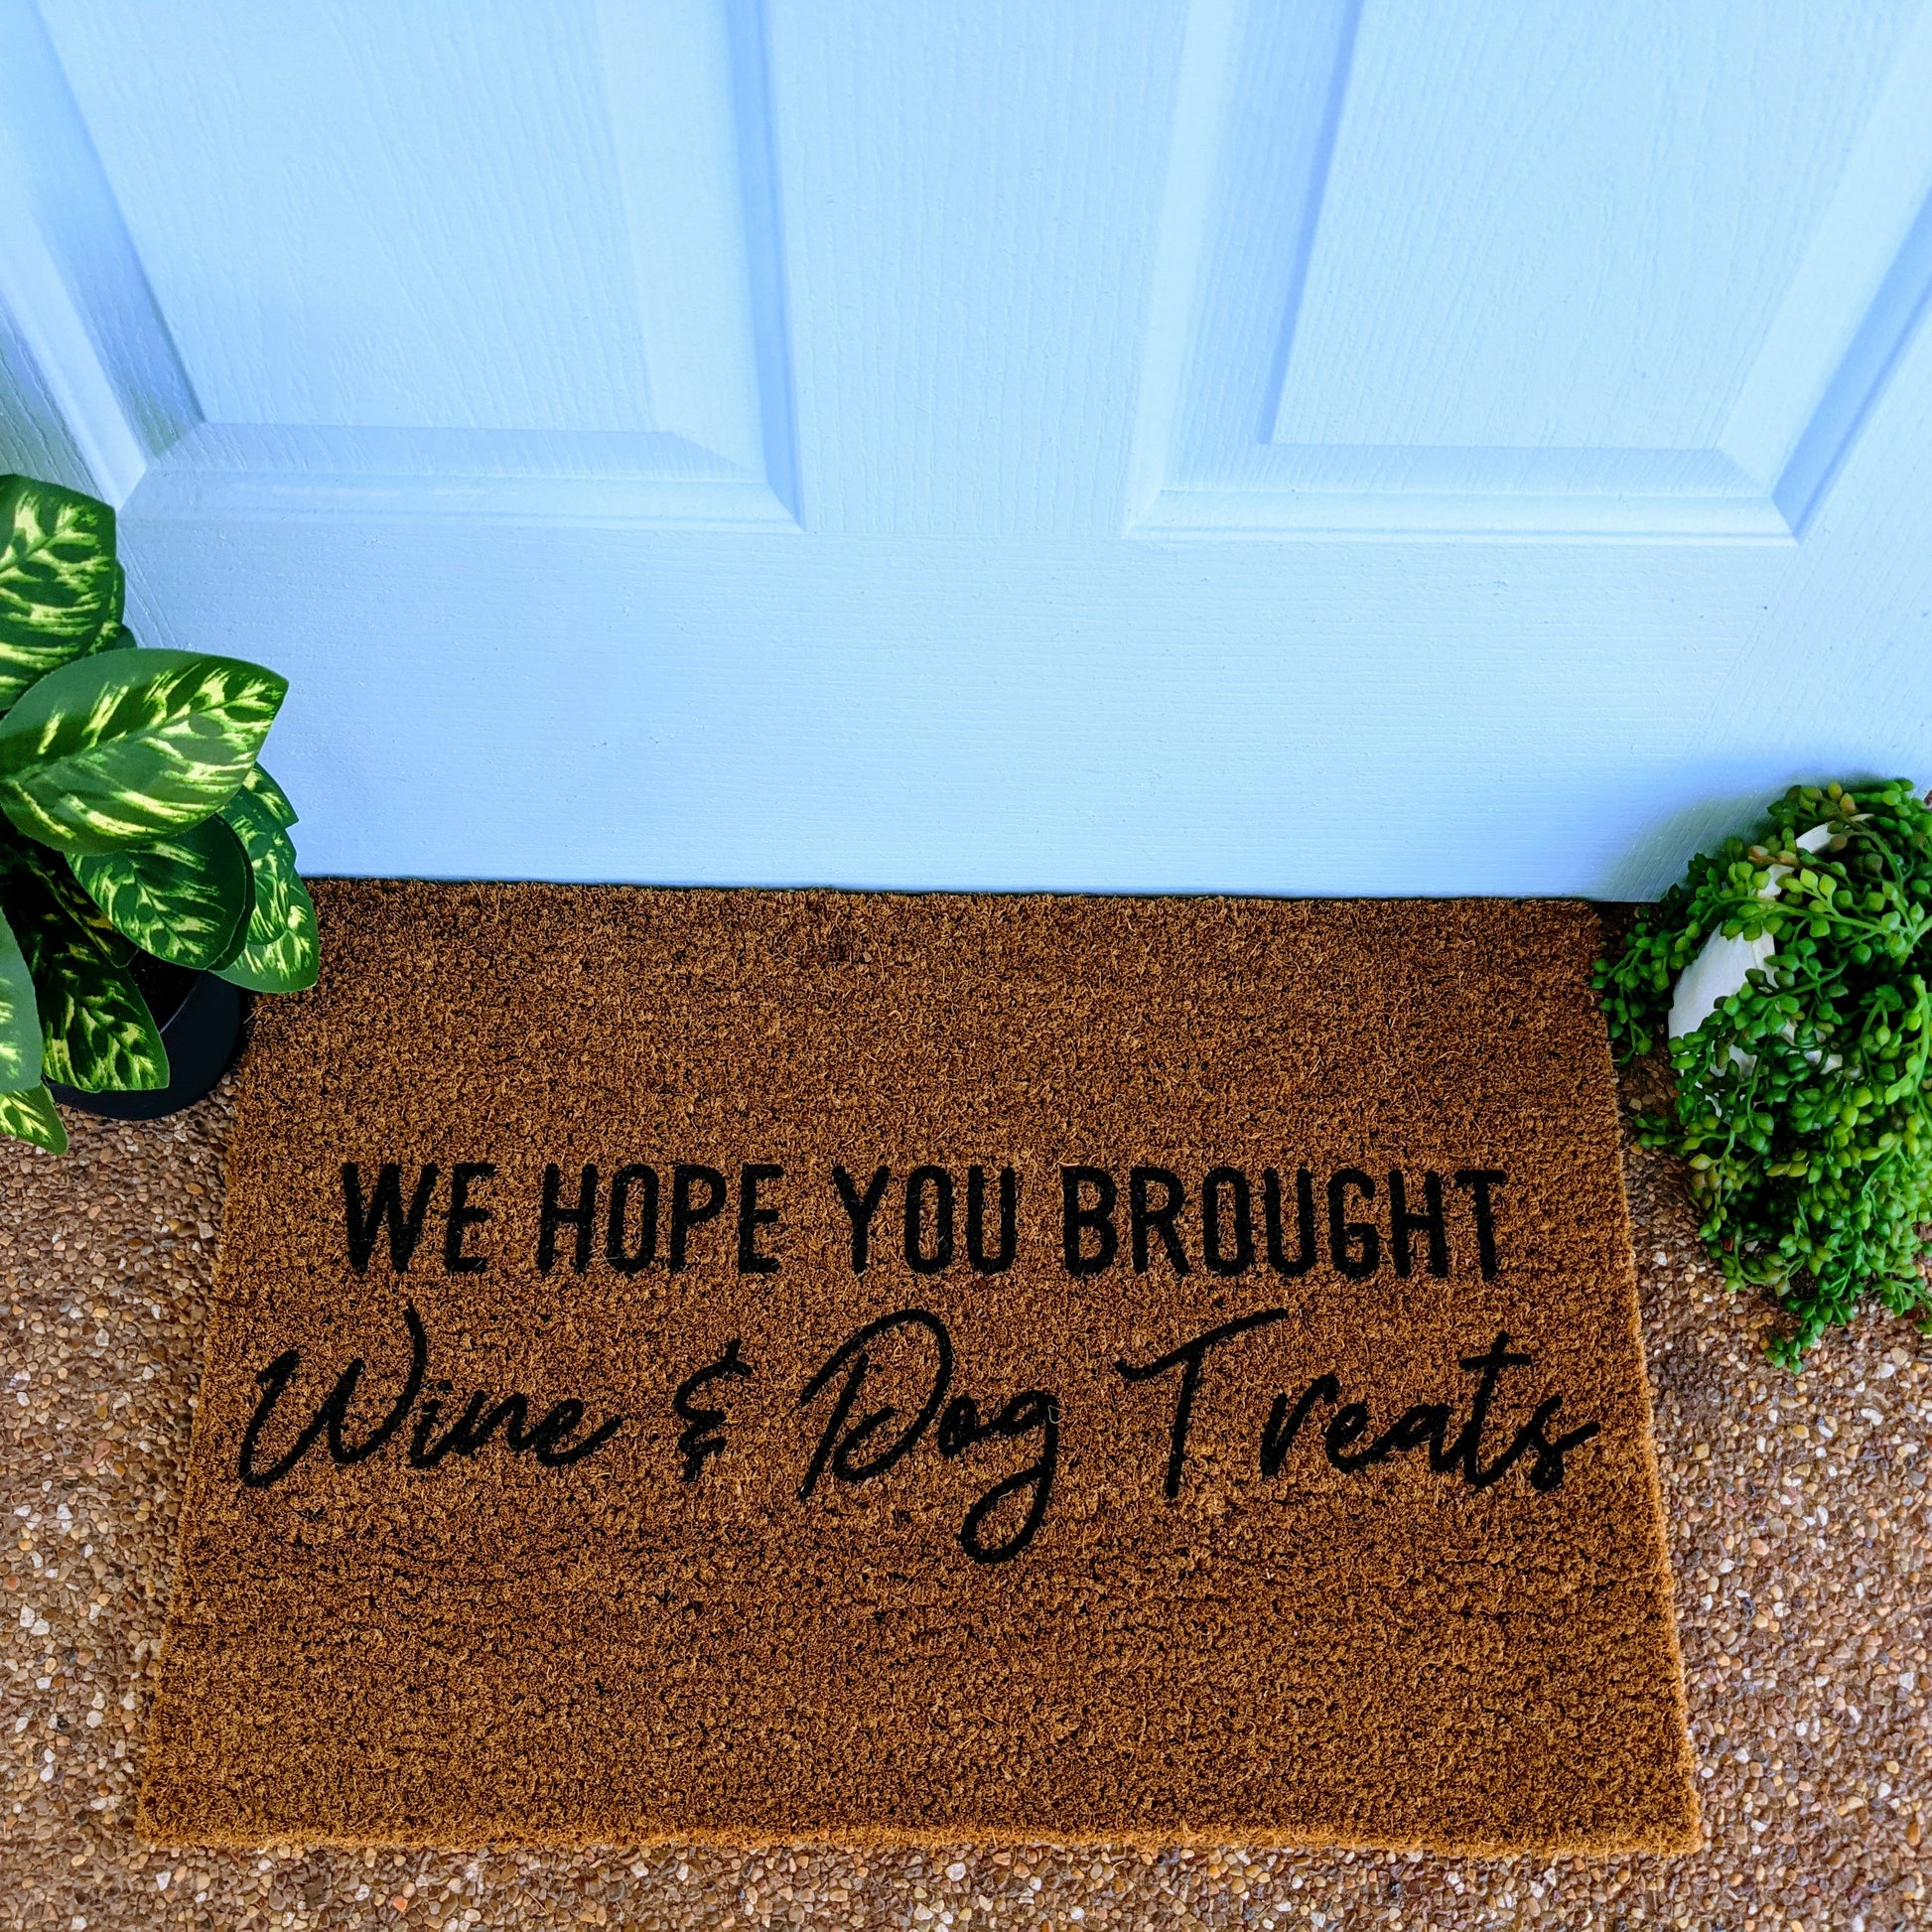 Custom Dog photo doormat, Hope you brought wine and dog treats